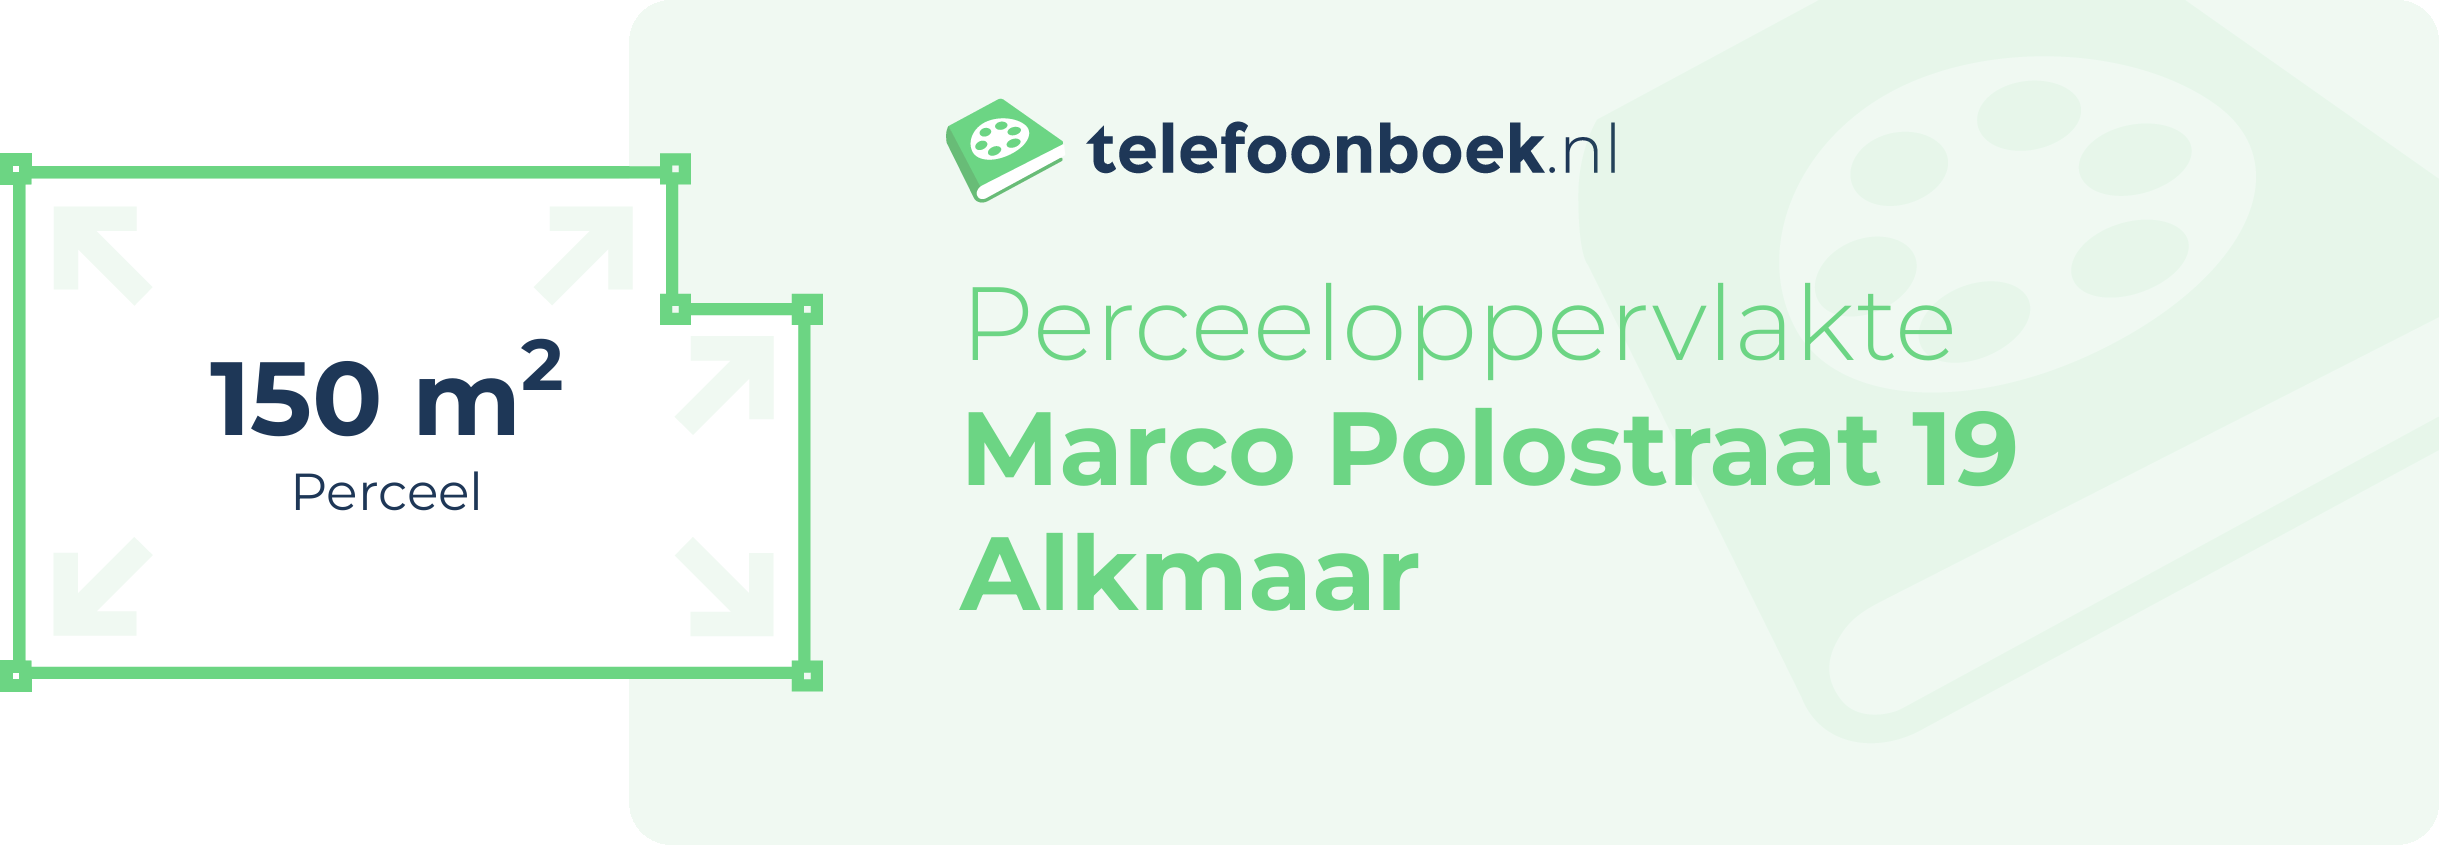 Perceeloppervlakte Marco Polostraat 19 Alkmaar